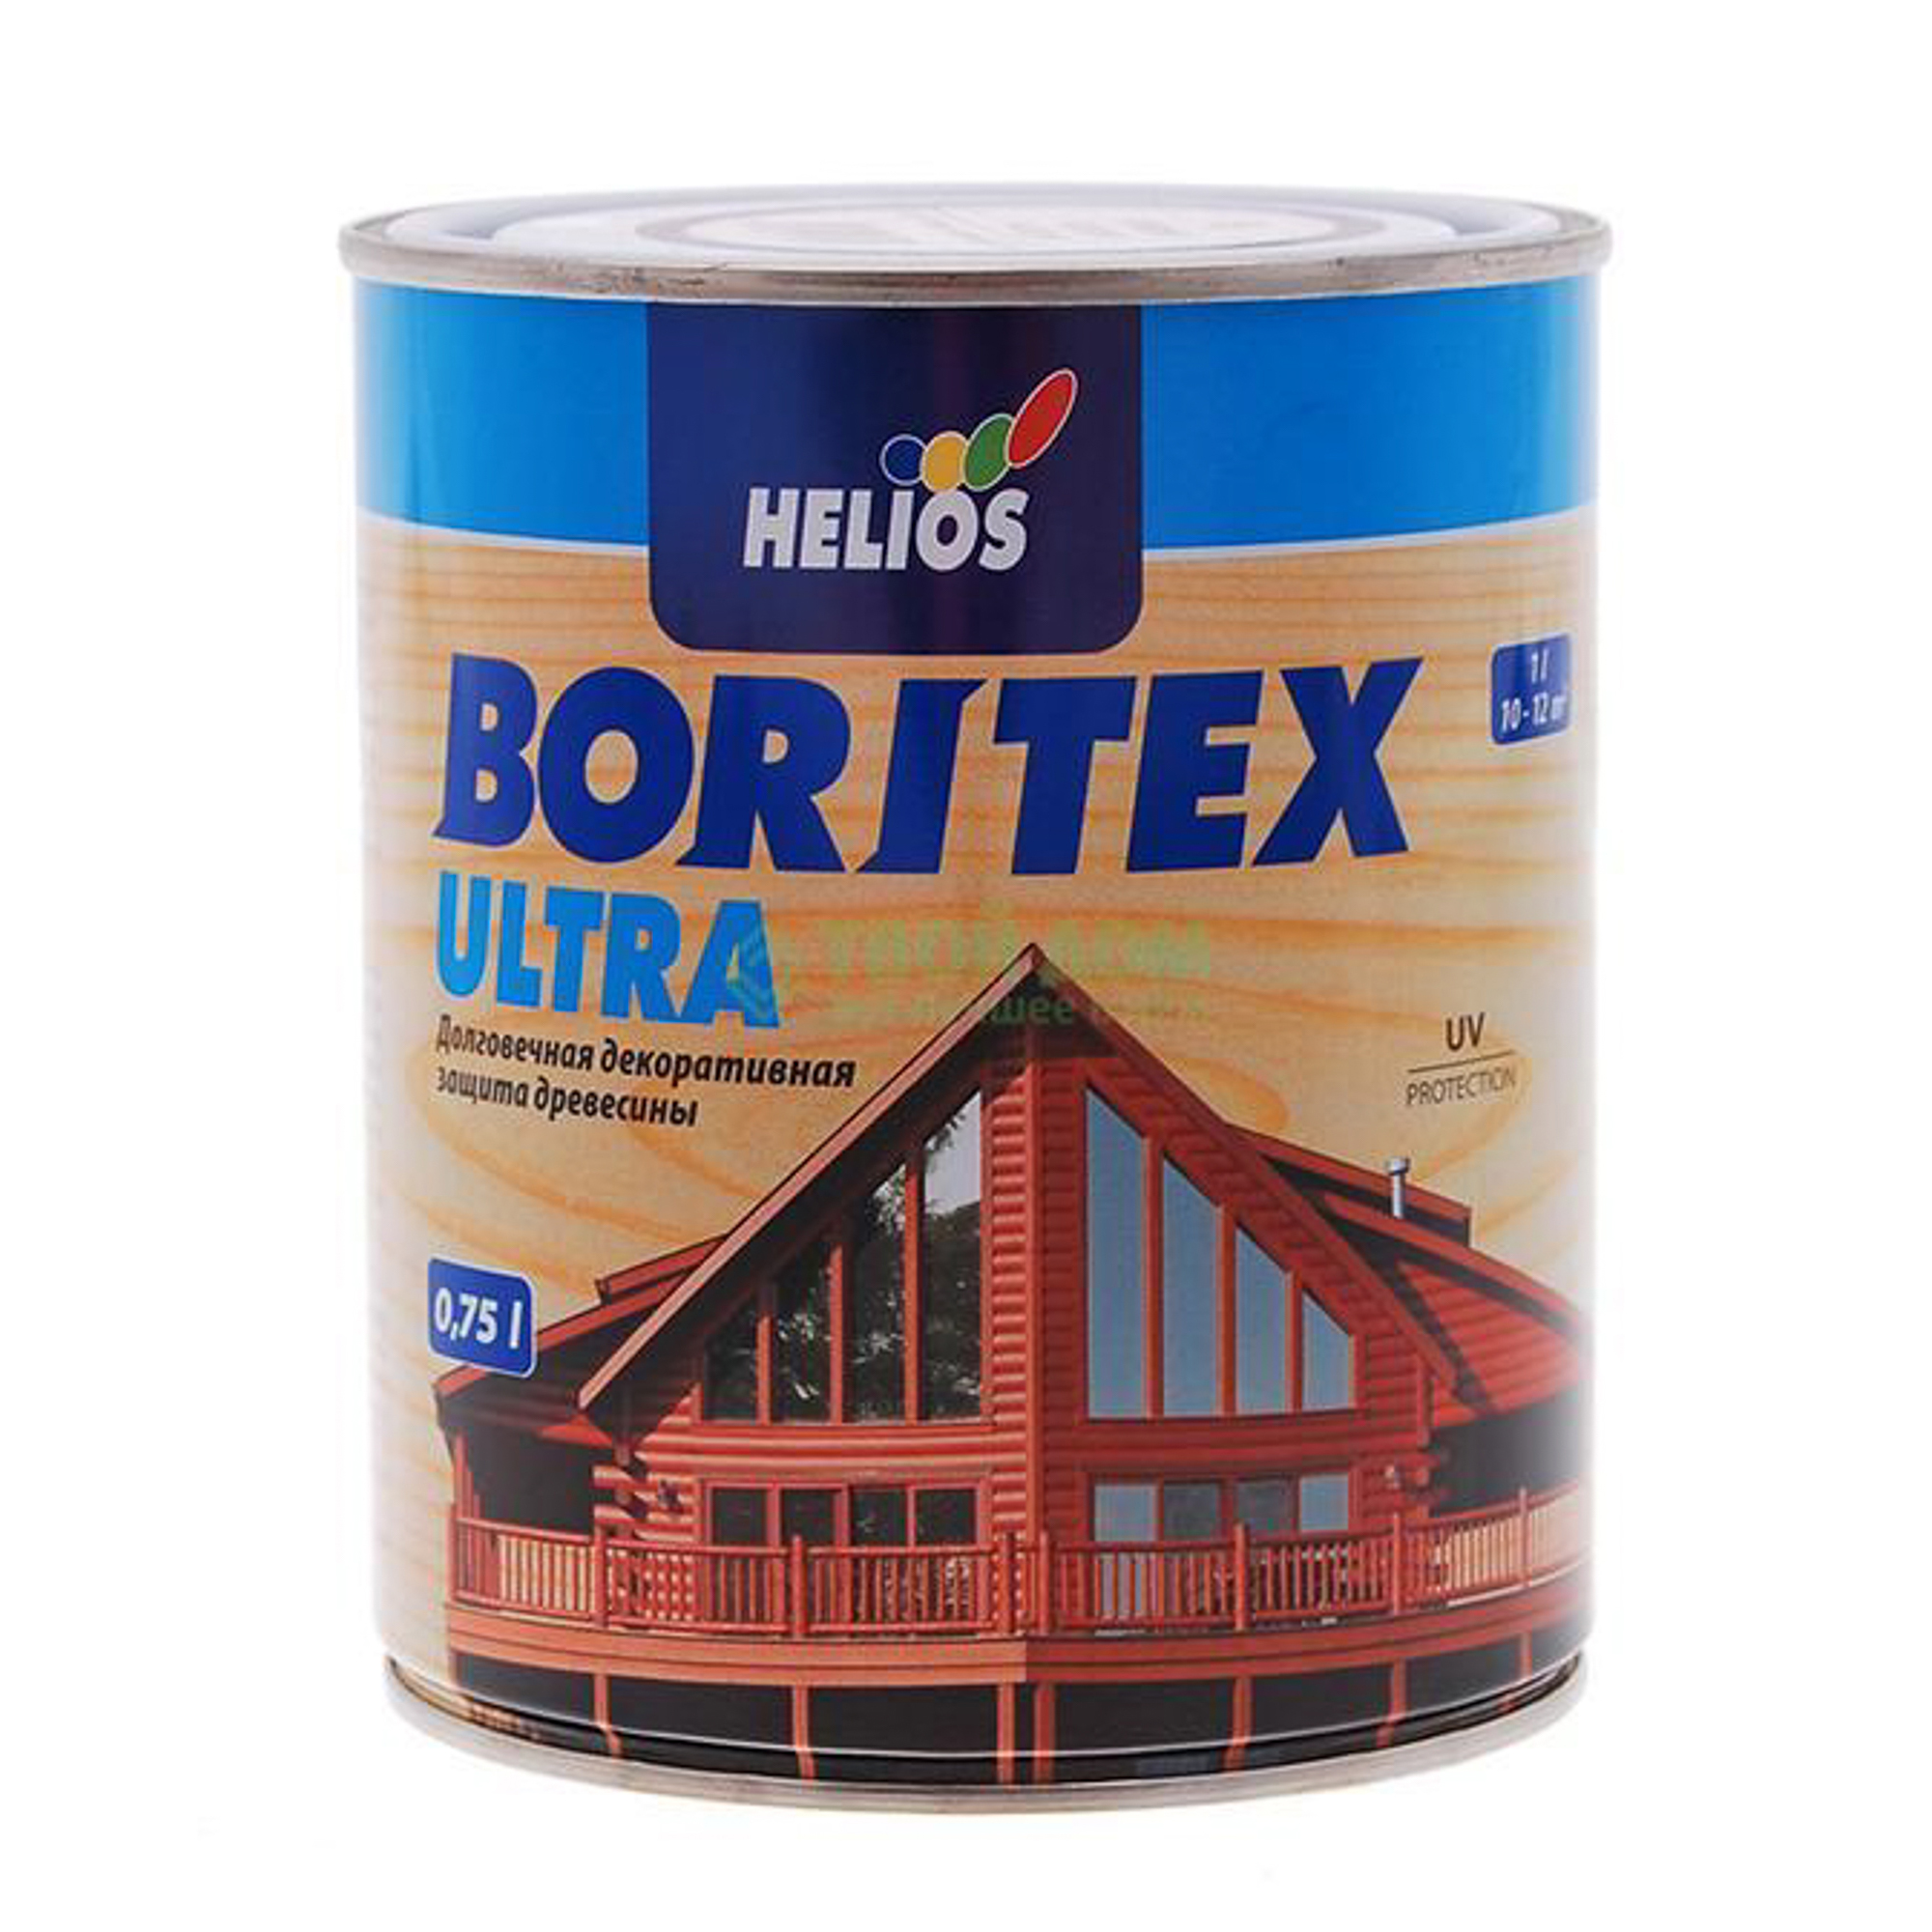 Антисептик Helios Boritex Ultra 0.75 White